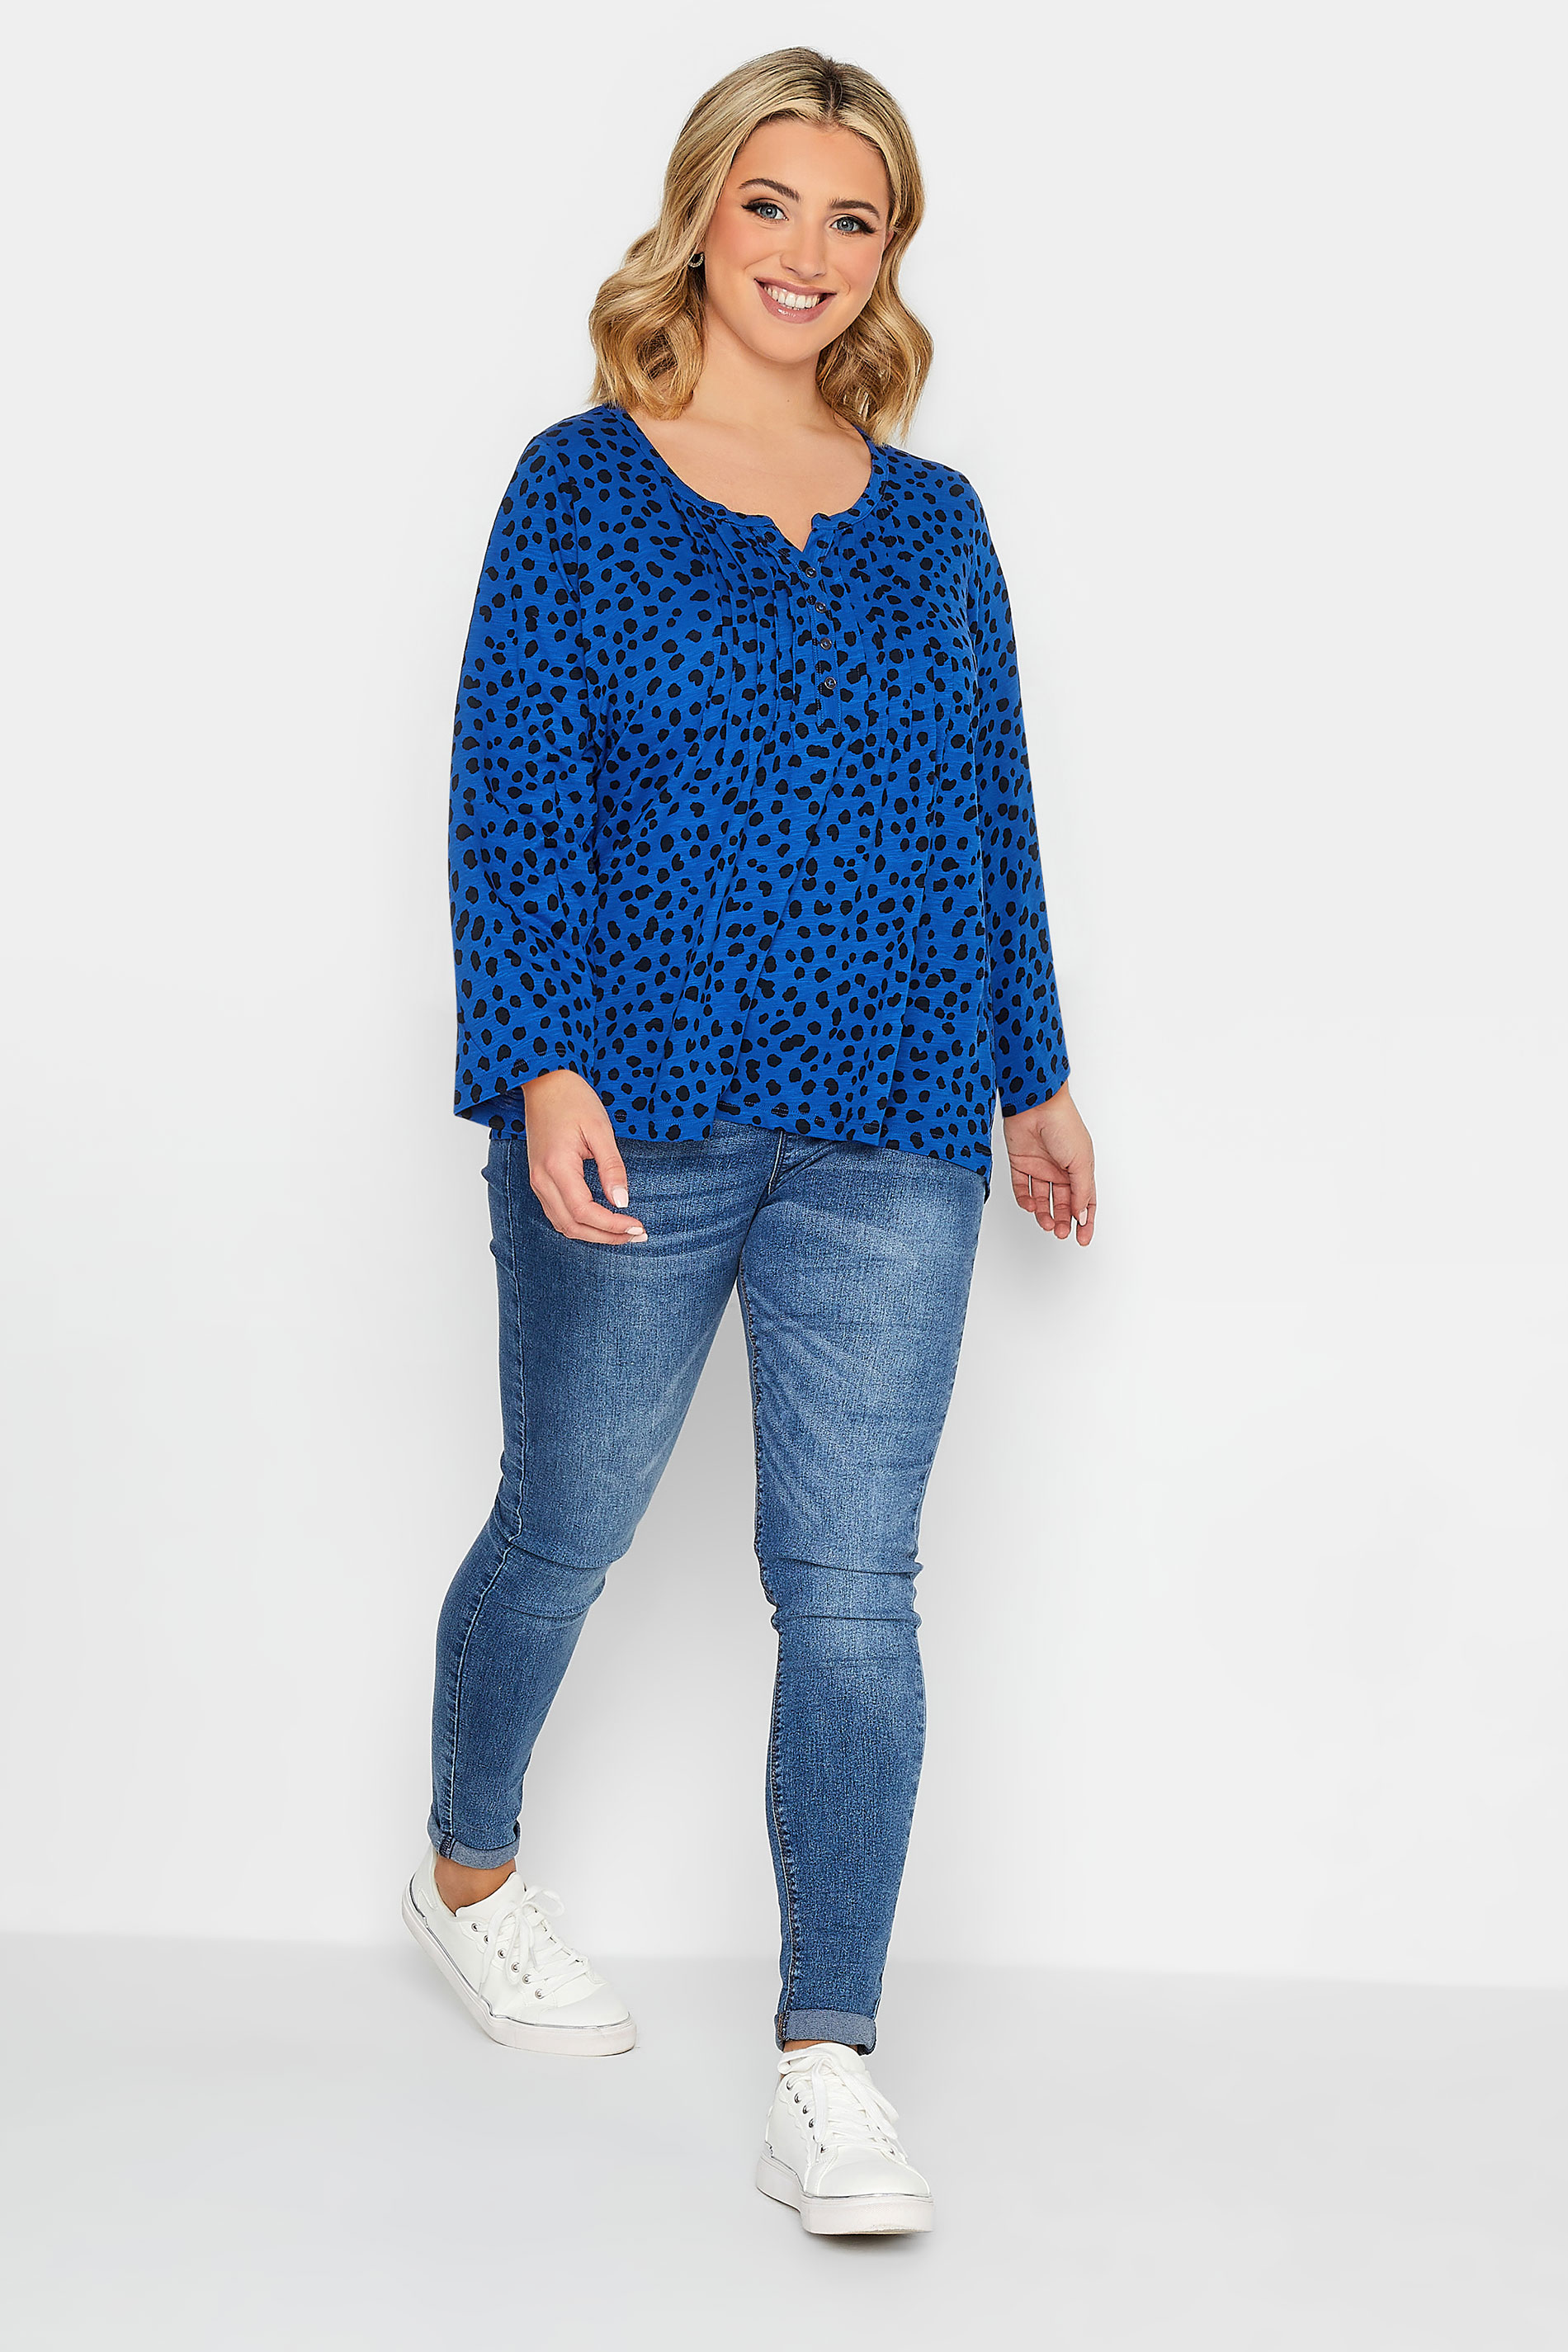 YOURS PETITE Plus Size Cobalt Blue Animal Print Cotton Henley T-Shirt | Yours Clothing 2